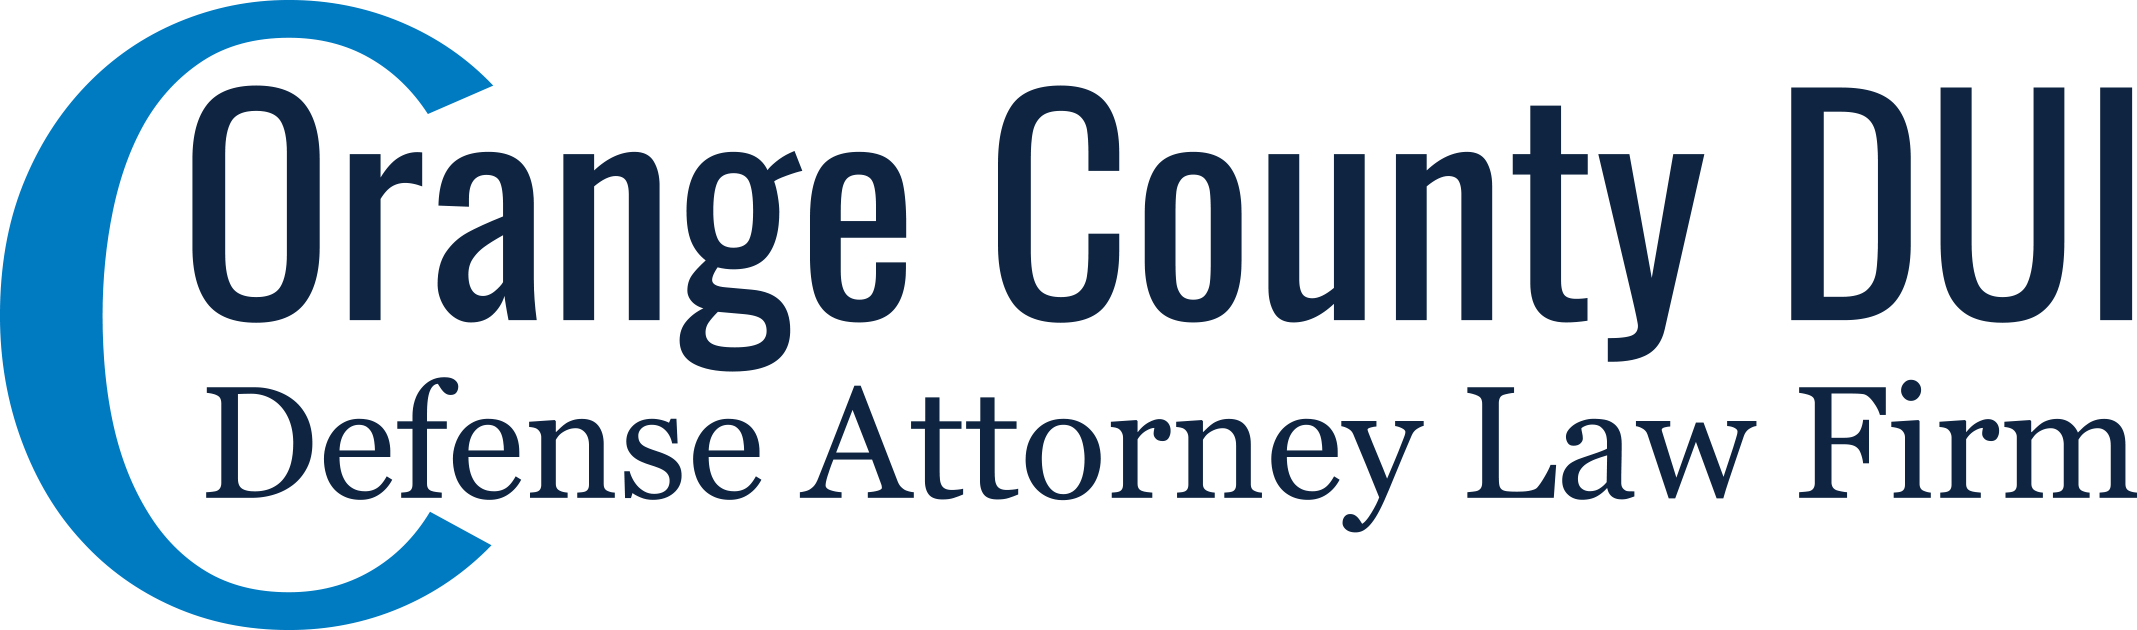 Orange County DUI Defense Attorney Law Firm logo